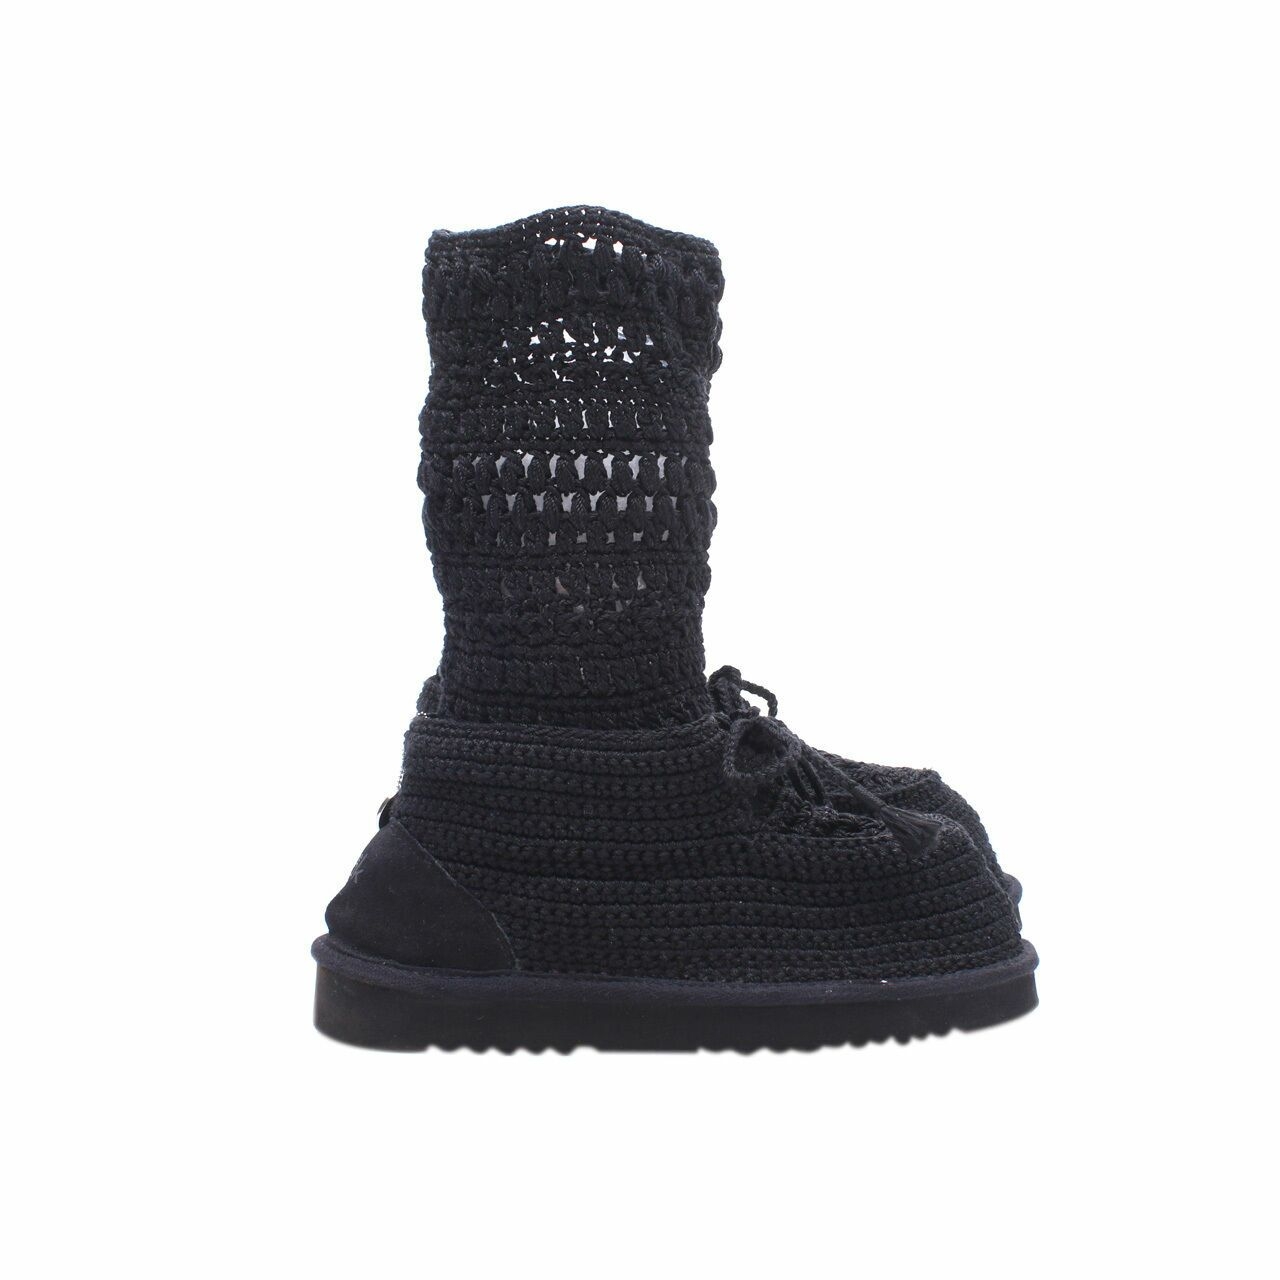 The Sak Crochet Kicks Black Boots